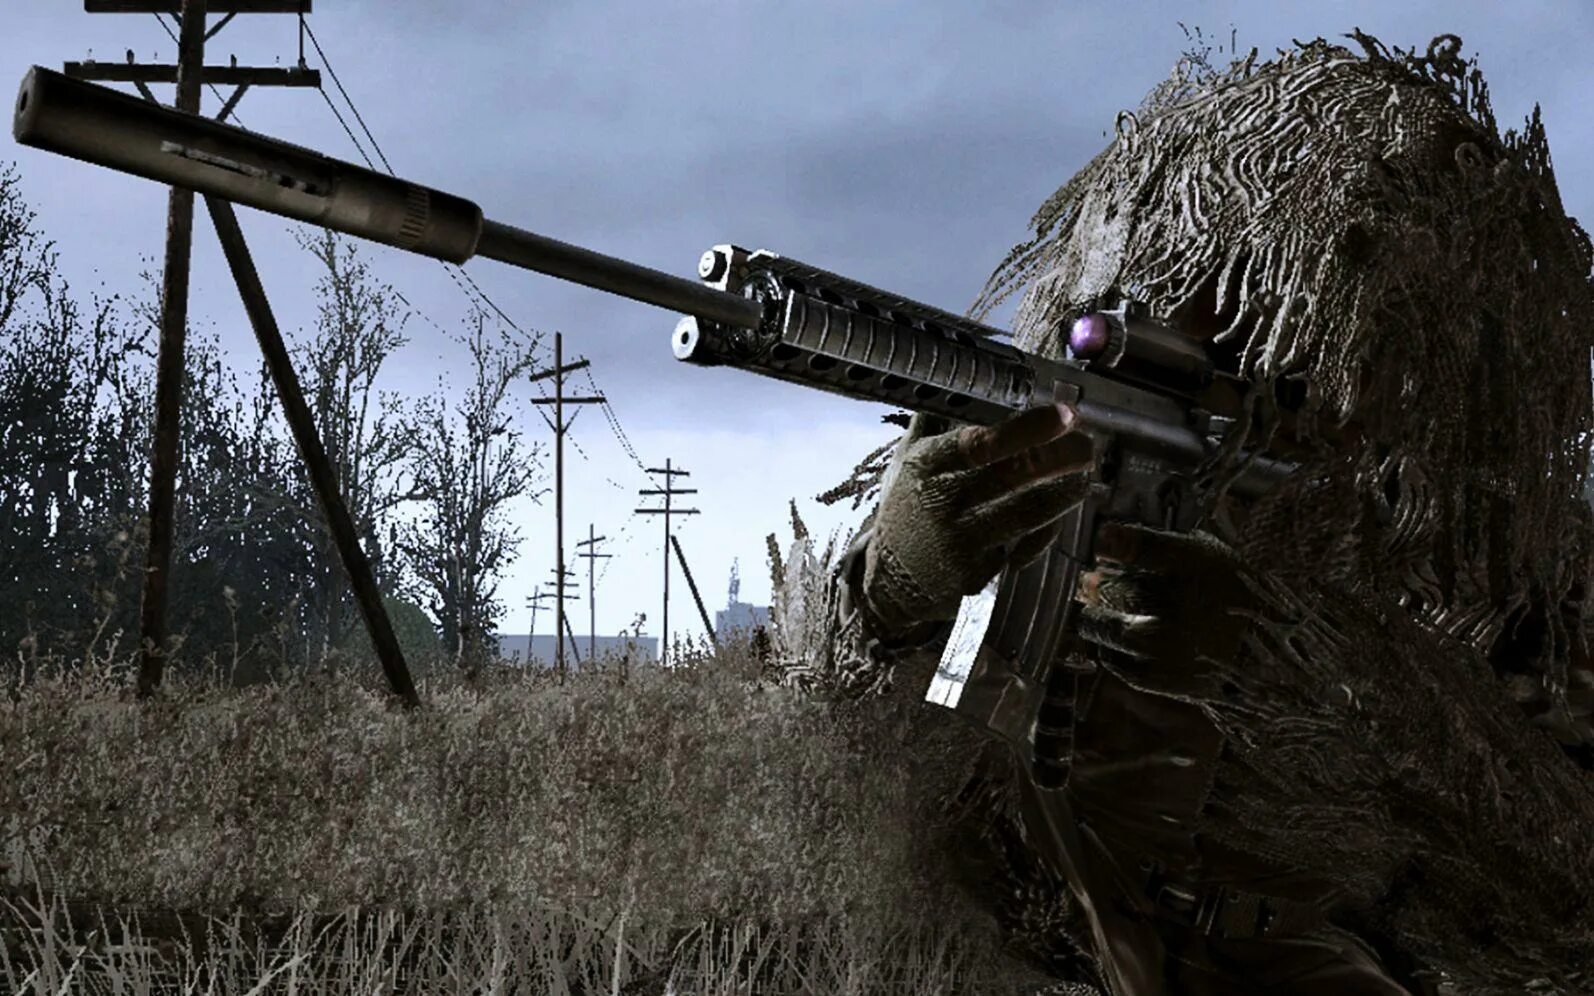 Call of Duty Modern Warfare Remastered. Call of Duty 4 Modern Warfare Remastered. Call of Duty Modern Warfare Remastered Чернобыль. Кал оф дьюти Модерн варфаер 4 Чернобыль.